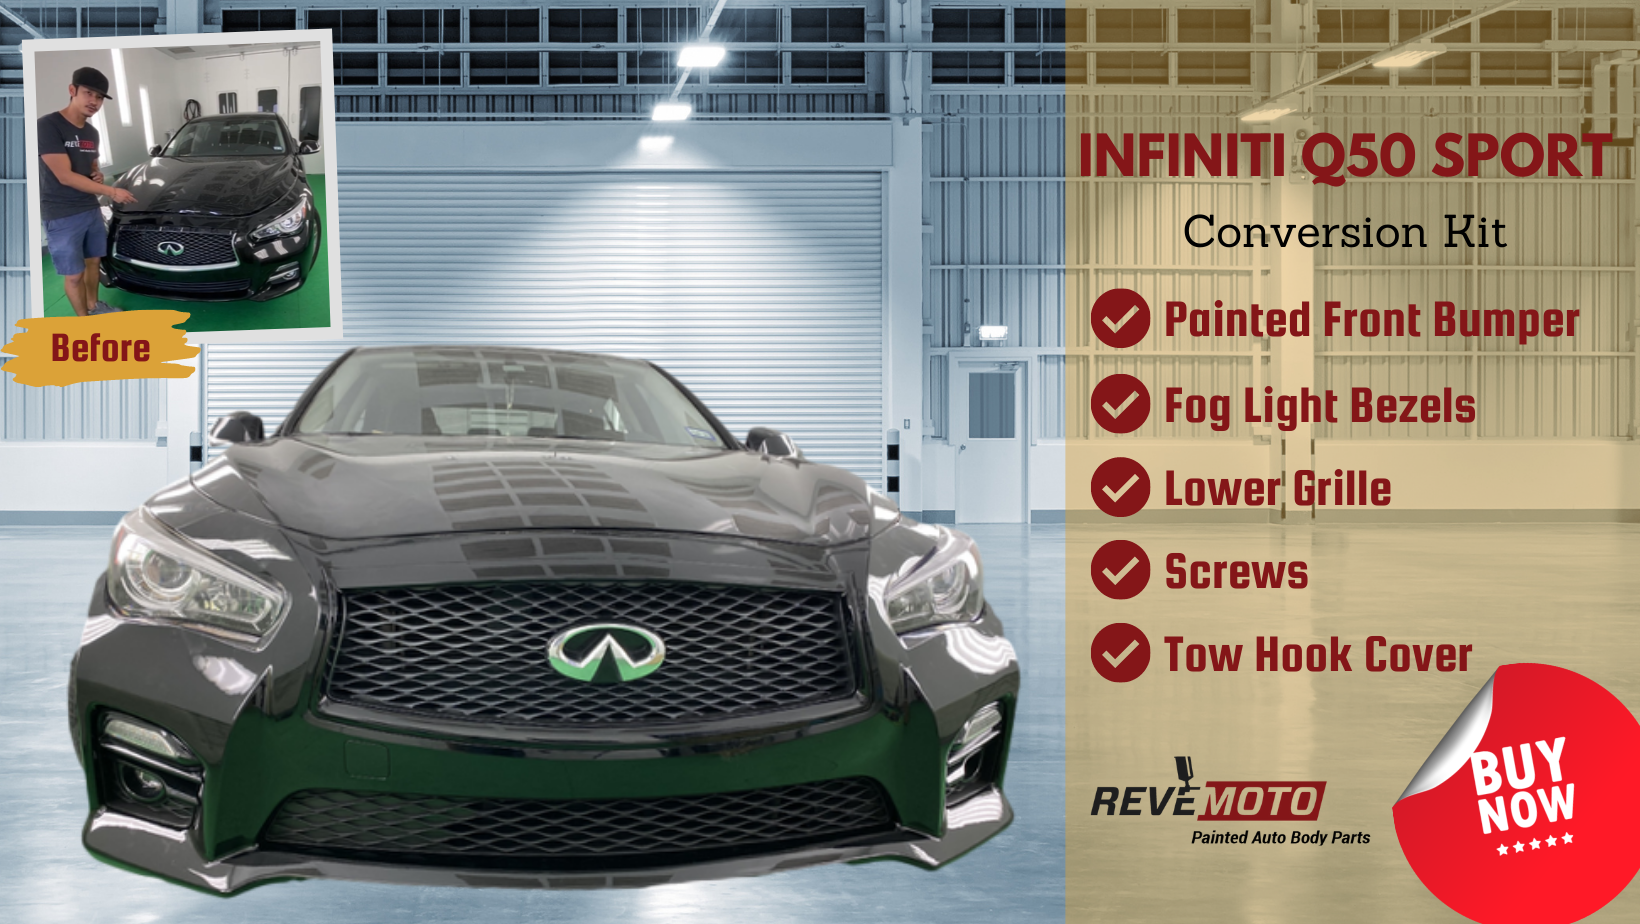 Infiniti Q50 Conversion Kit - ReveMoto Painted Auto Body Parts